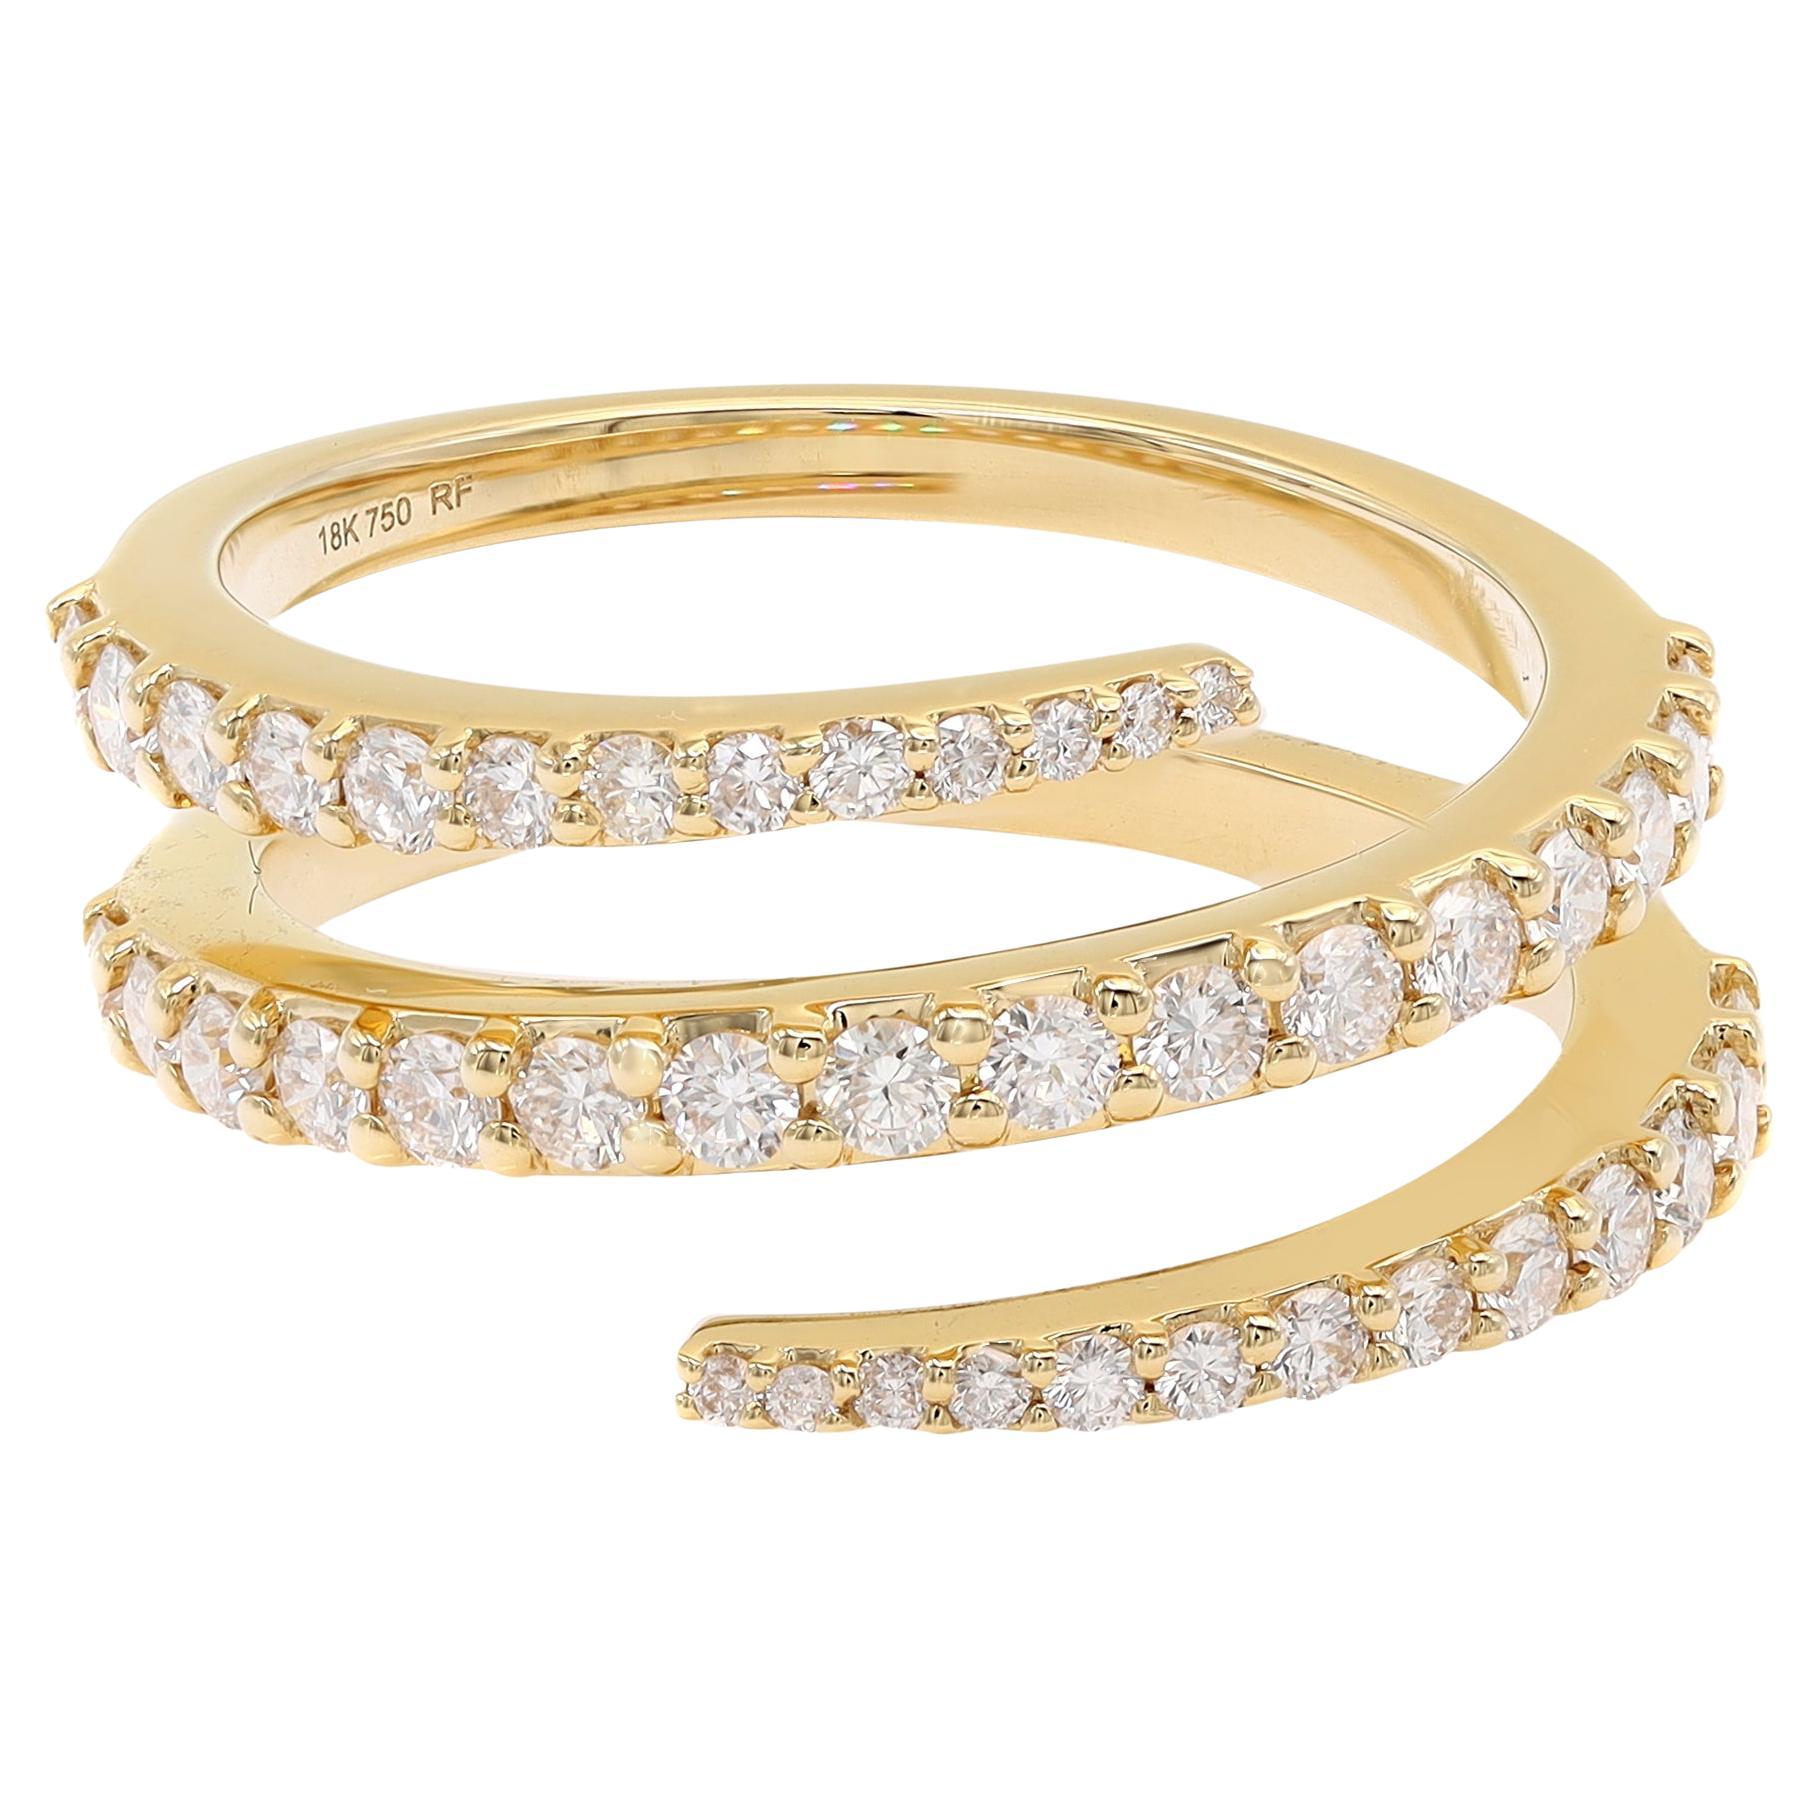 Prong Set Diamond Multi Row Spiral Ring 18K Yellow Gold 0.76Cttw Size 7